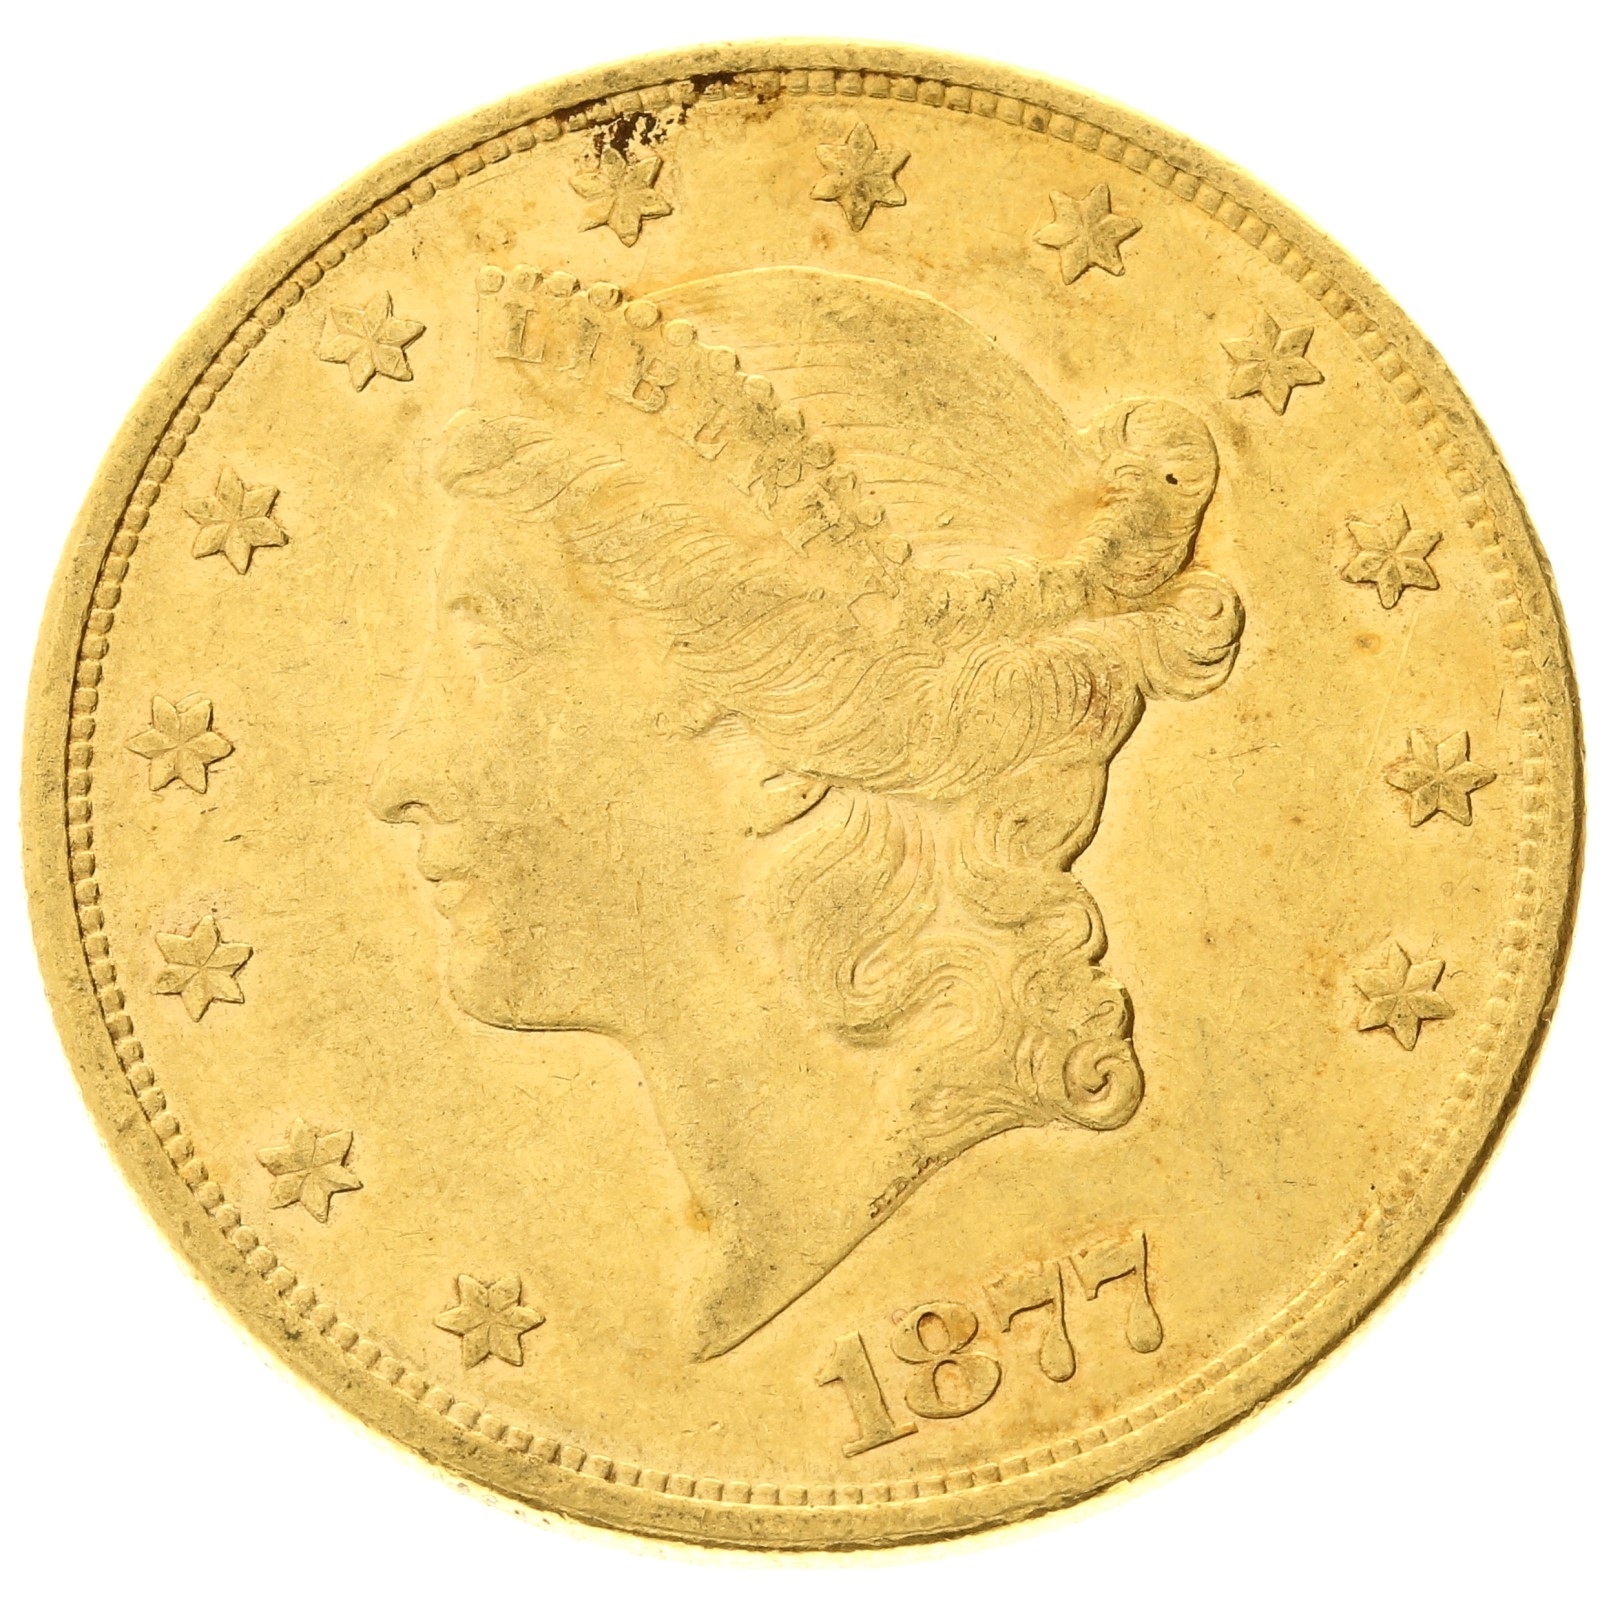 USA - 20 dollars 1877 - S - Liberty head 